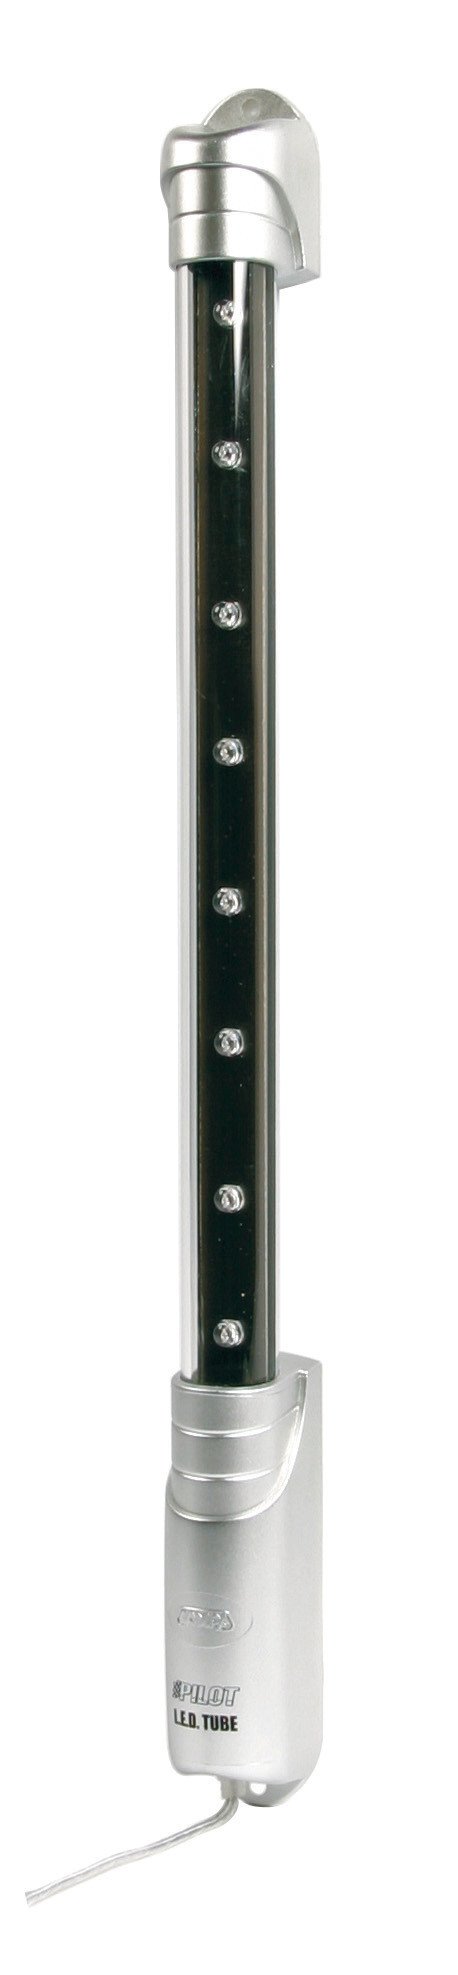 Lampa 73552 8 LED Bar, 25,4 cm von Lampa